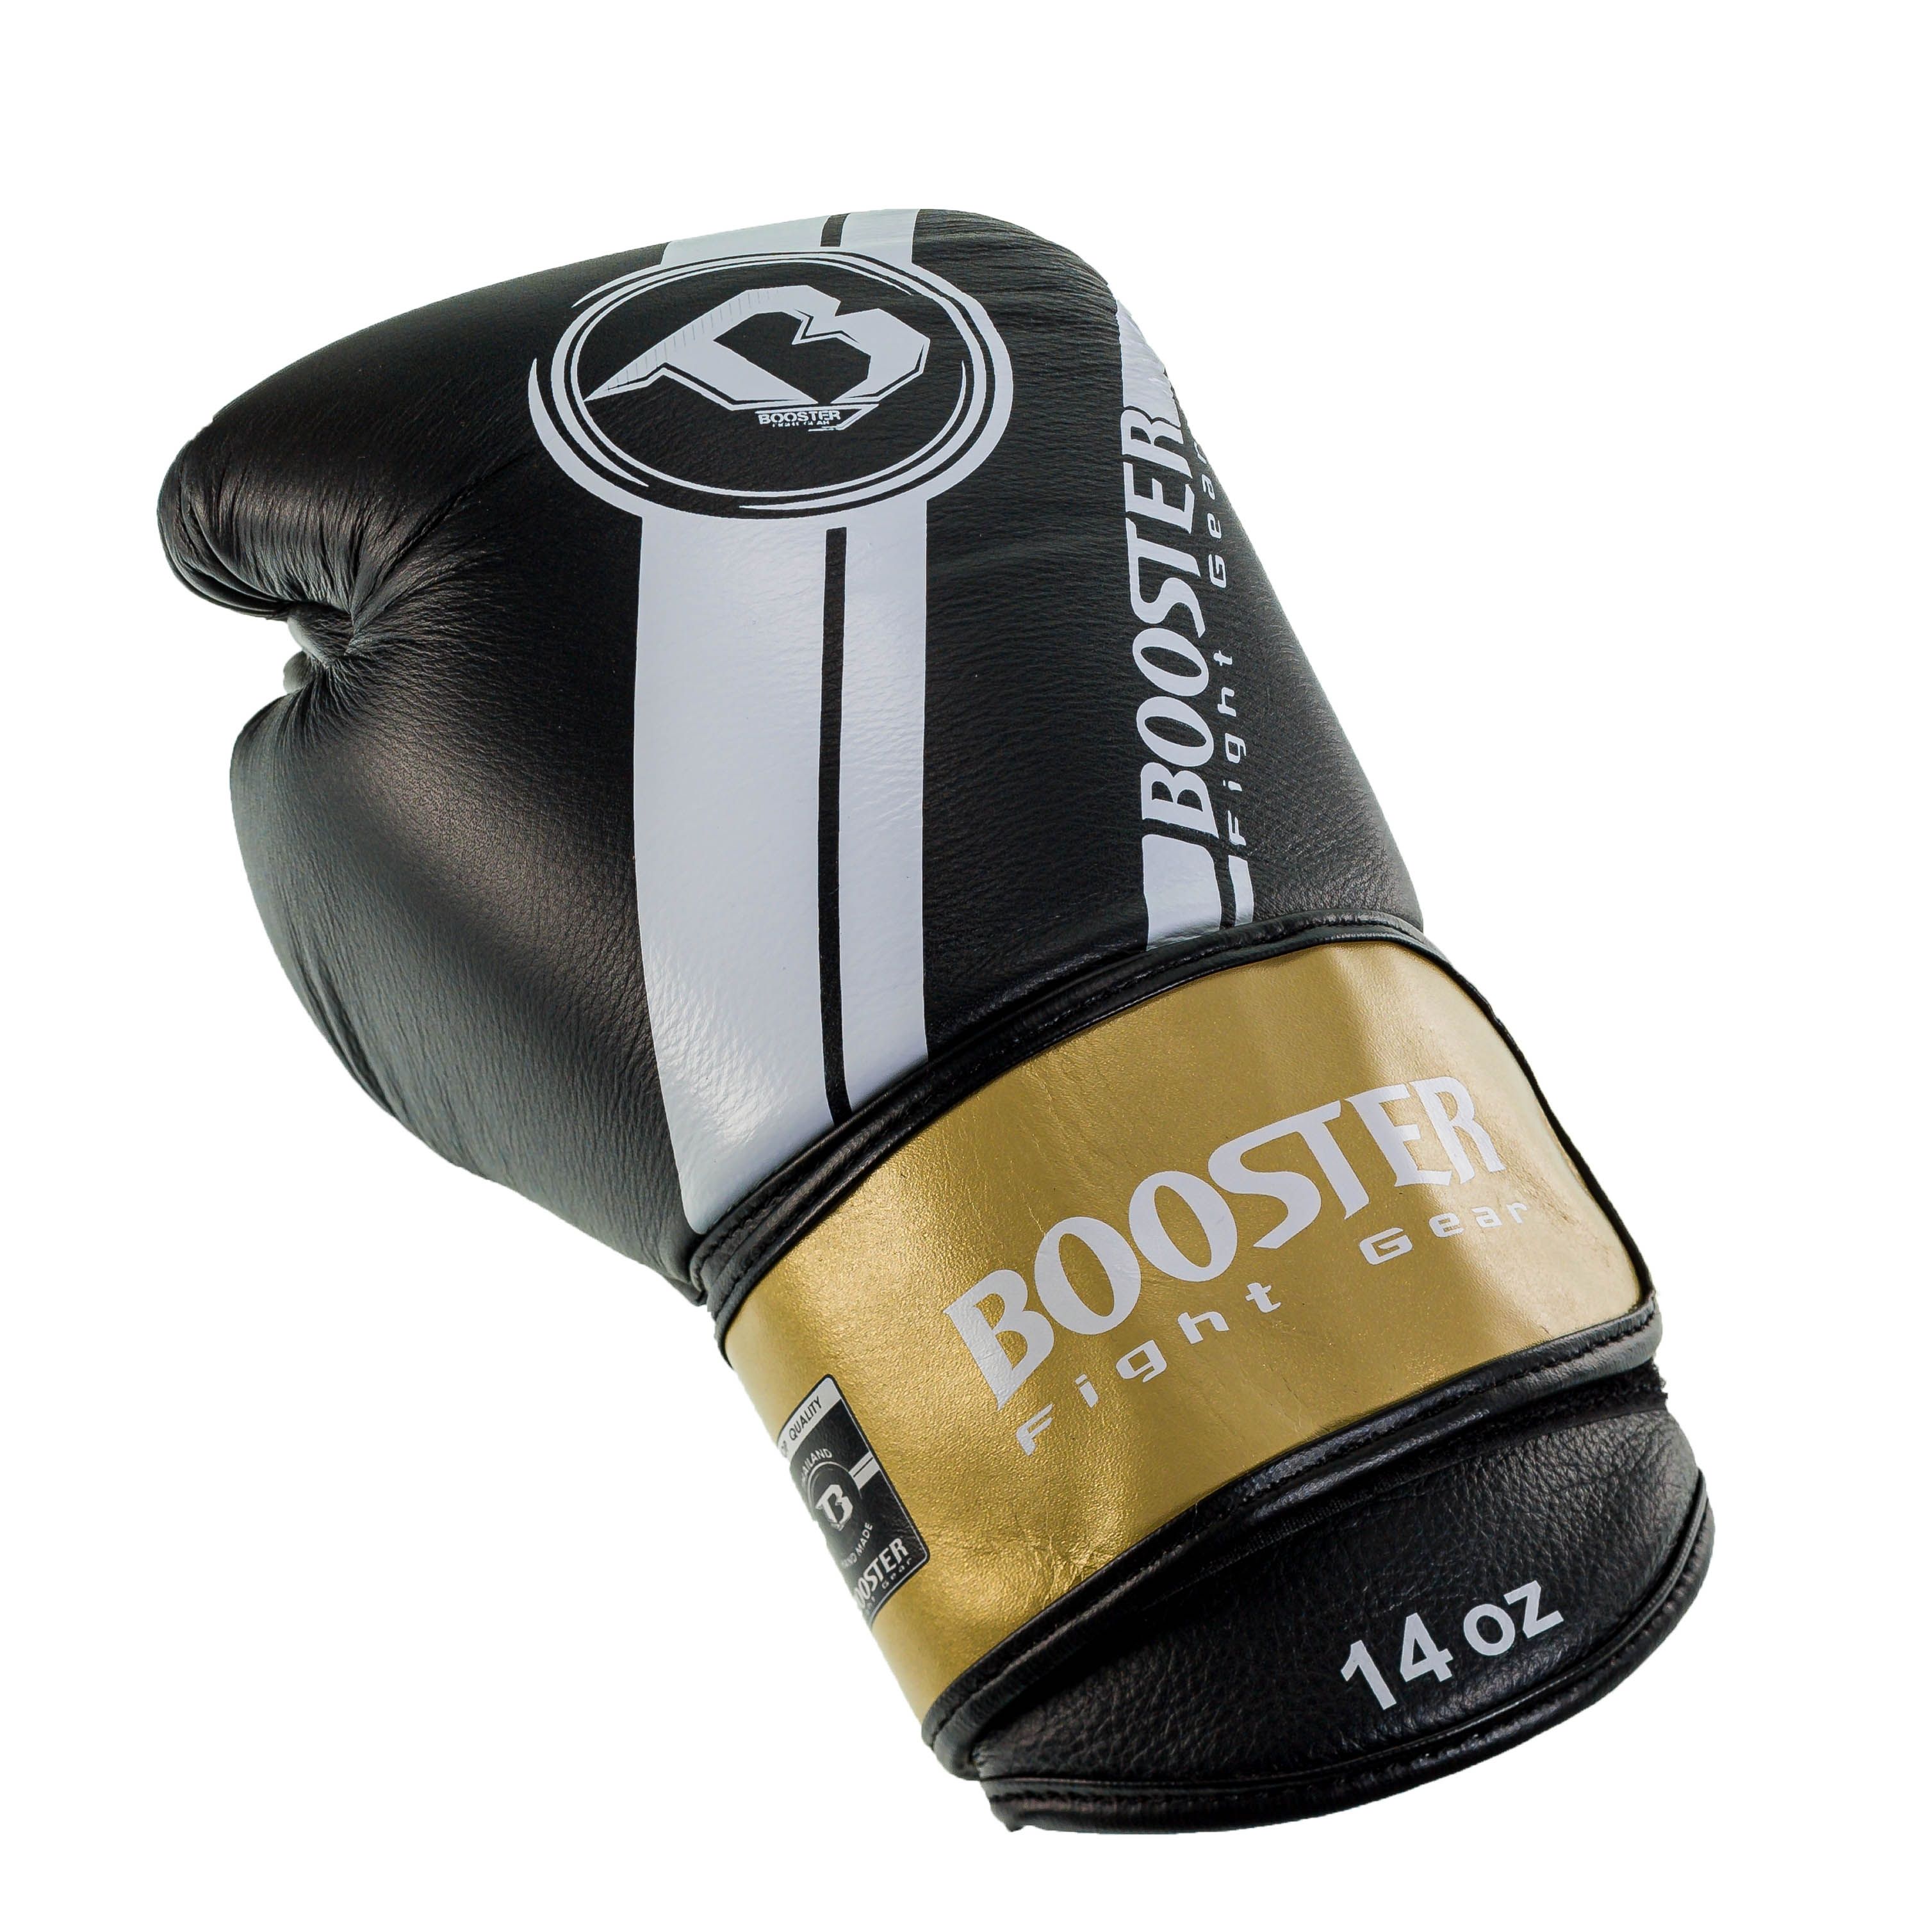 Booster Fightgear - Bokshandschoenen - V3 - Goud - Zwart - GOLD - BLACK